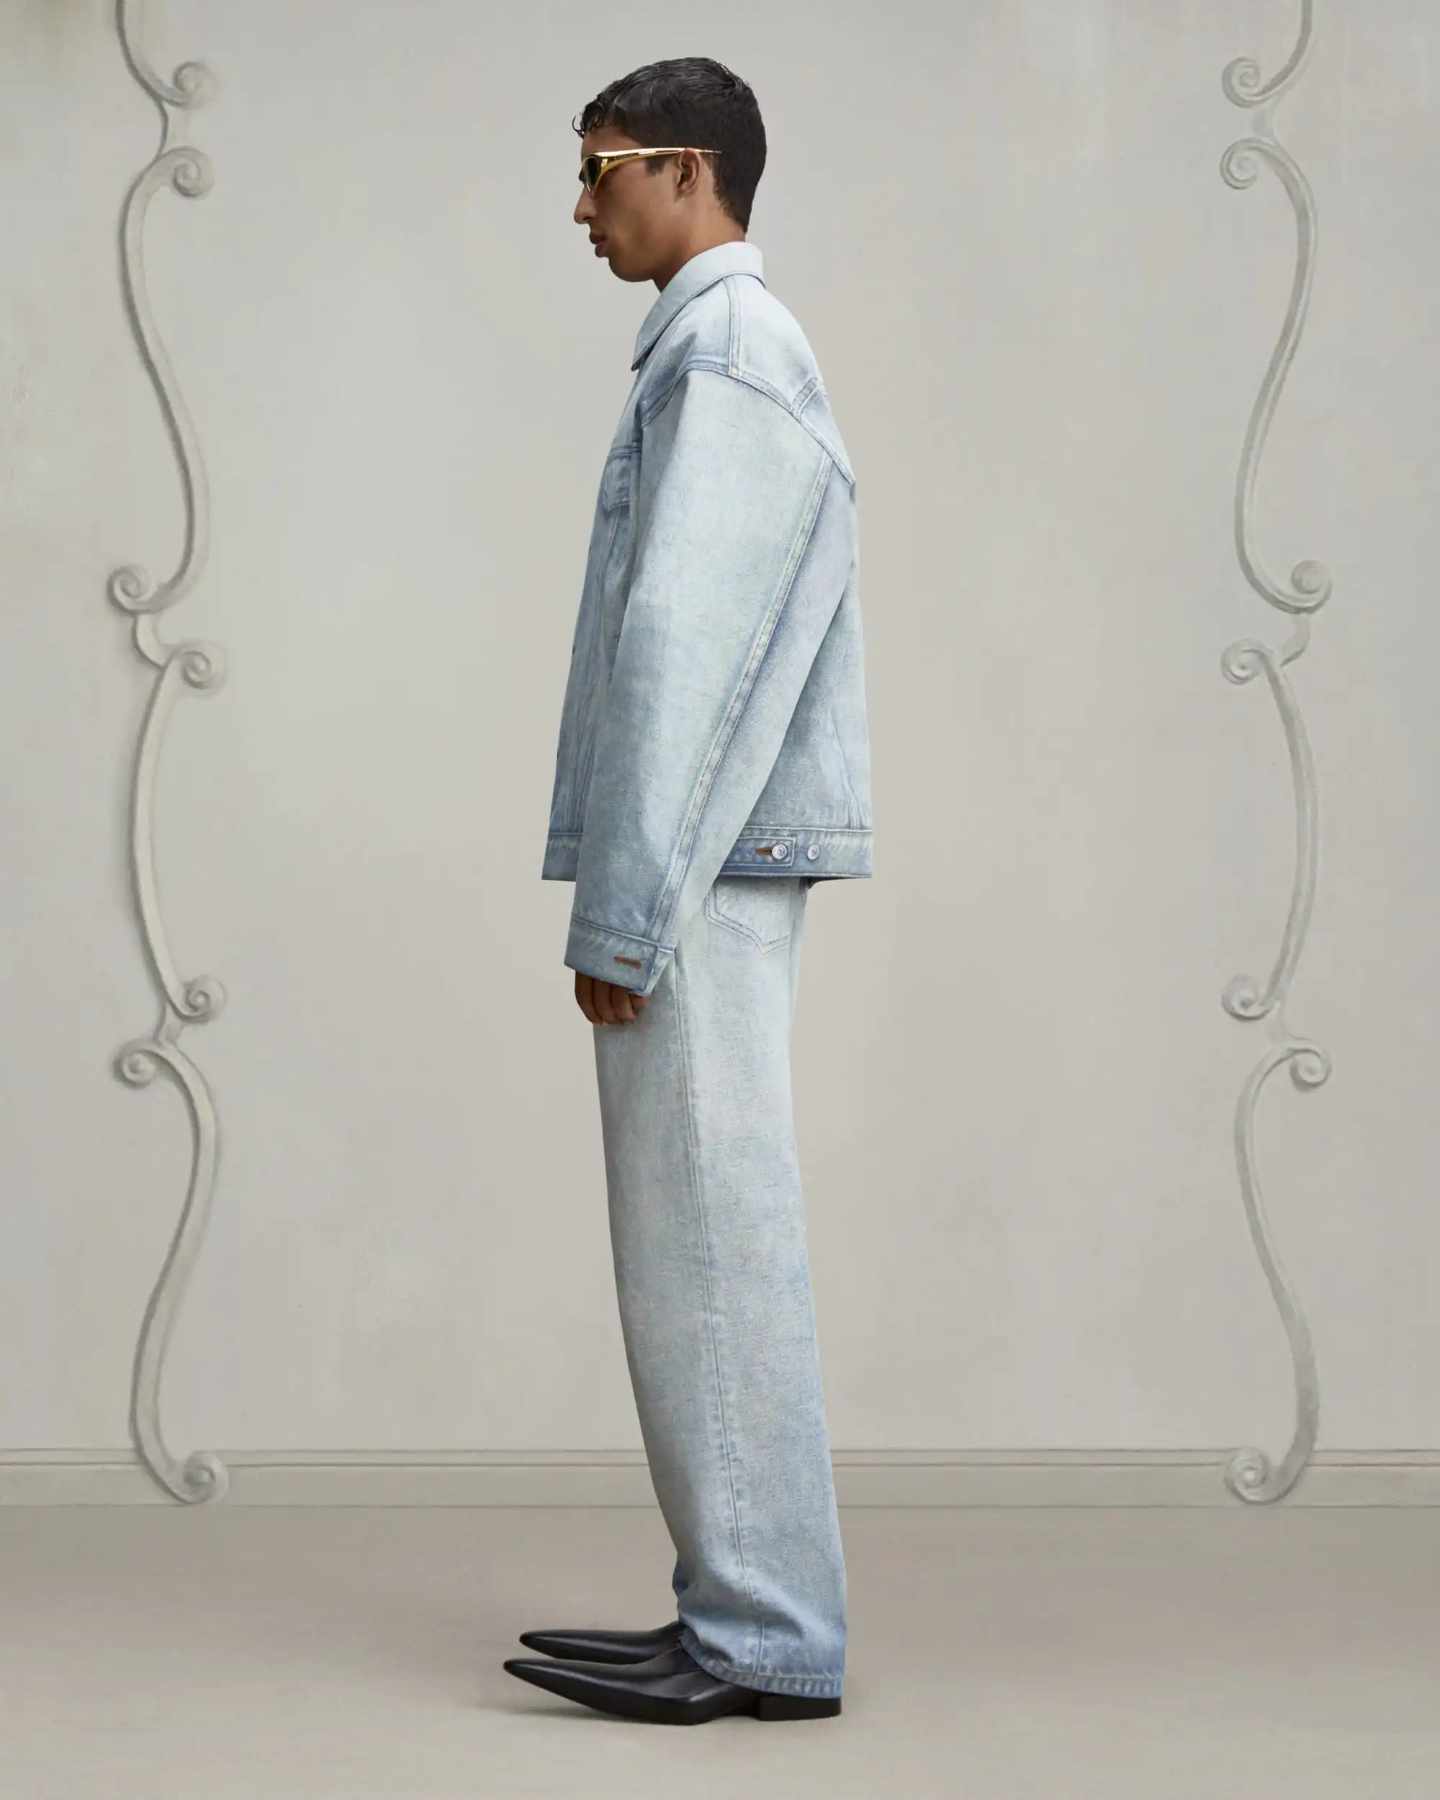 Couture for Cowboys: Meet Balenciaga's Blue Jeans